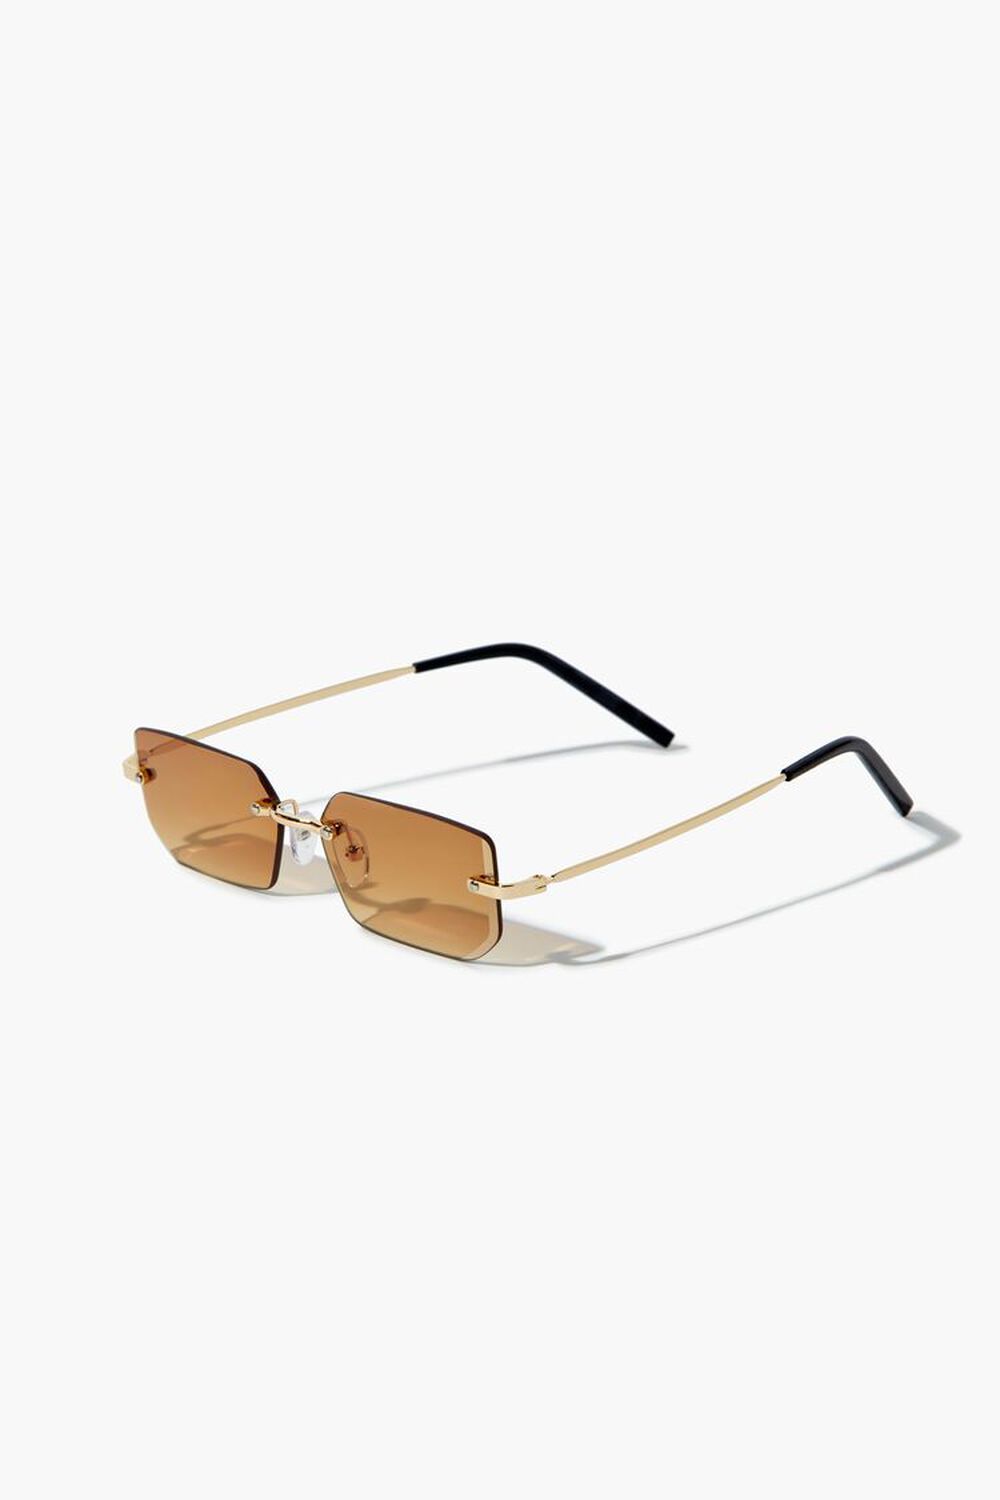 Rimless Rectangular Sunglasses, image 2